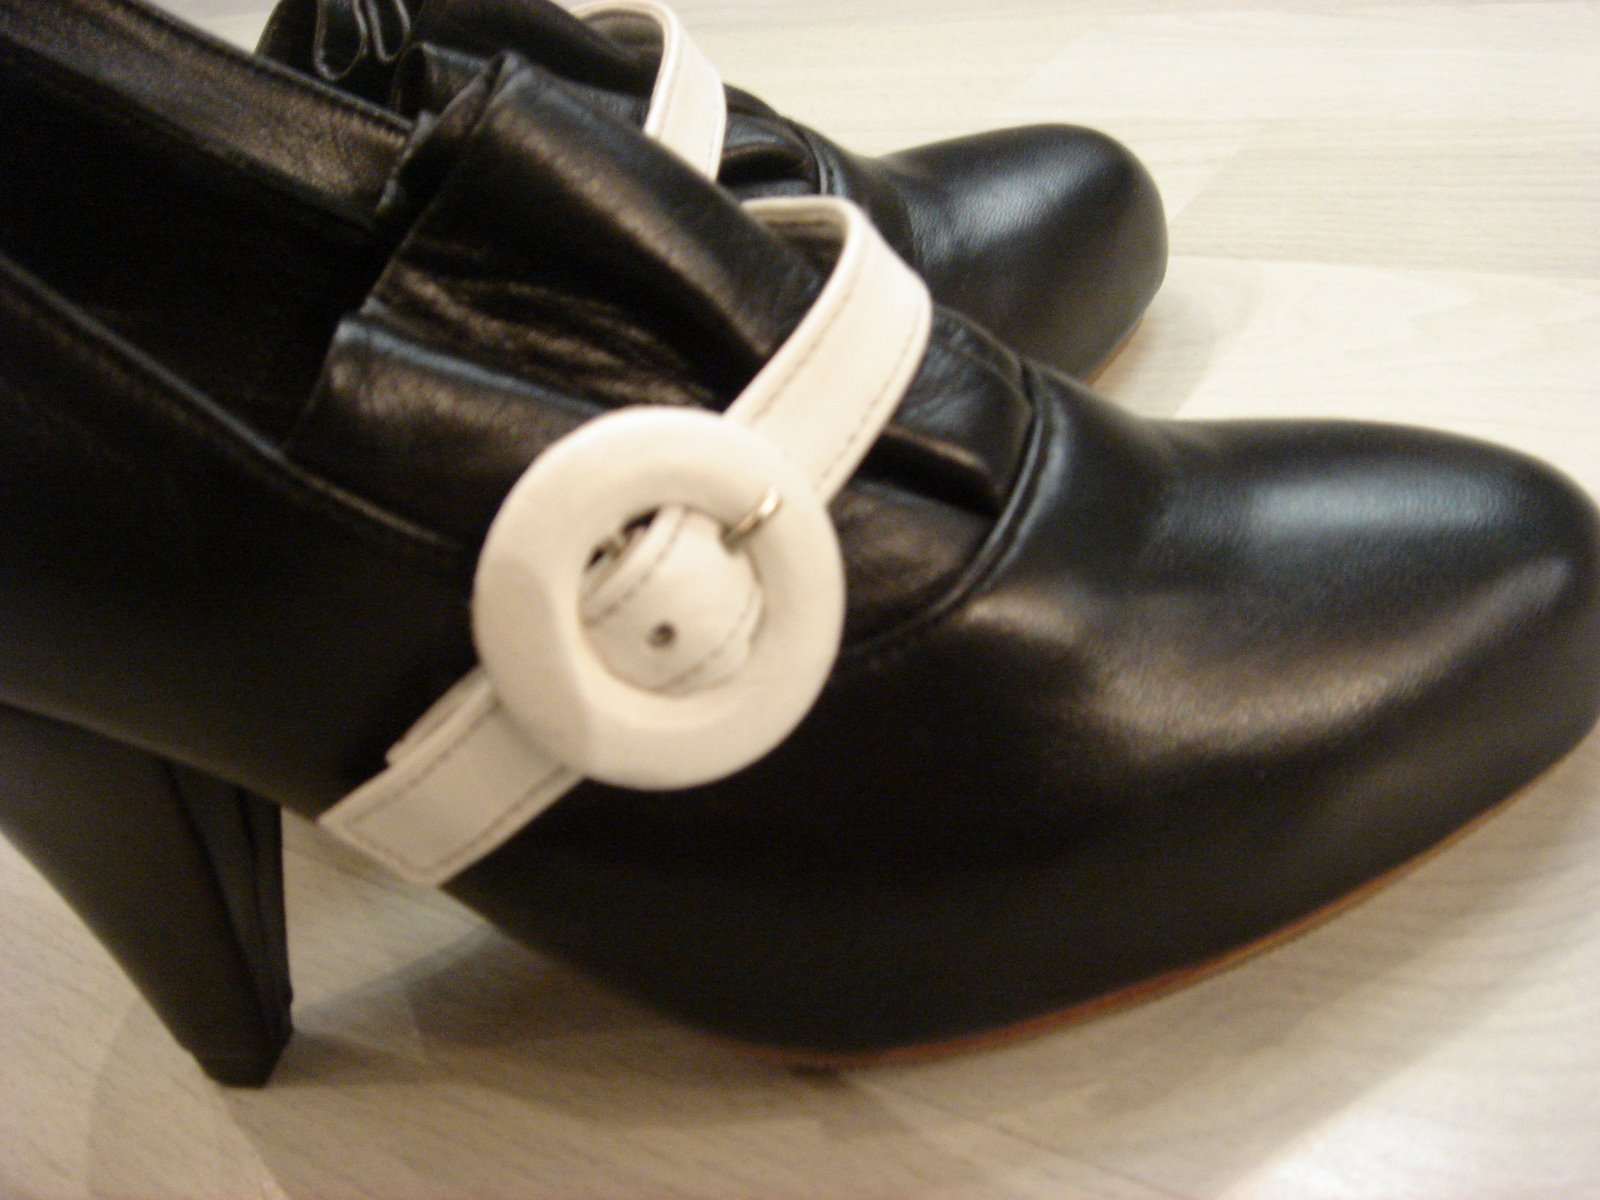 [mogil+anna+mali-+blk+leather+shoes2.JPG]